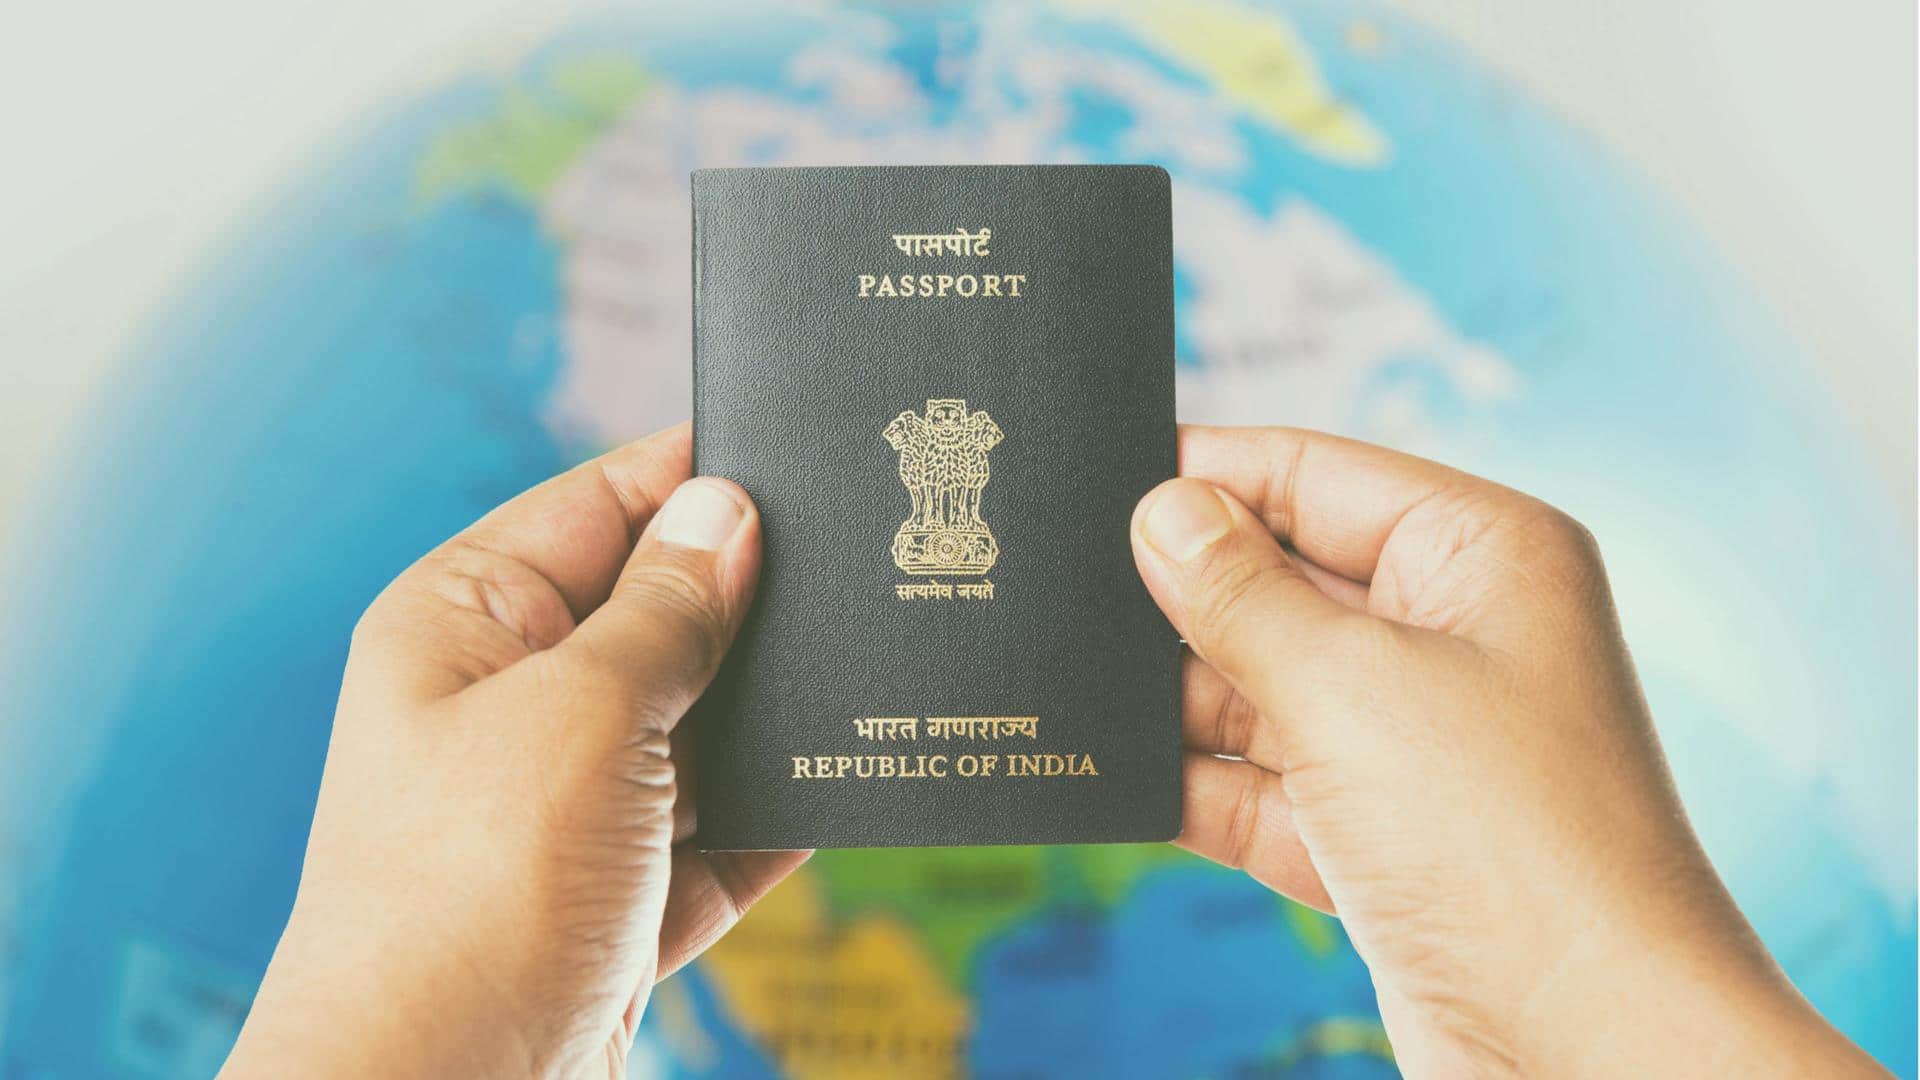 Newest visa-free destinations for Indian passport holders